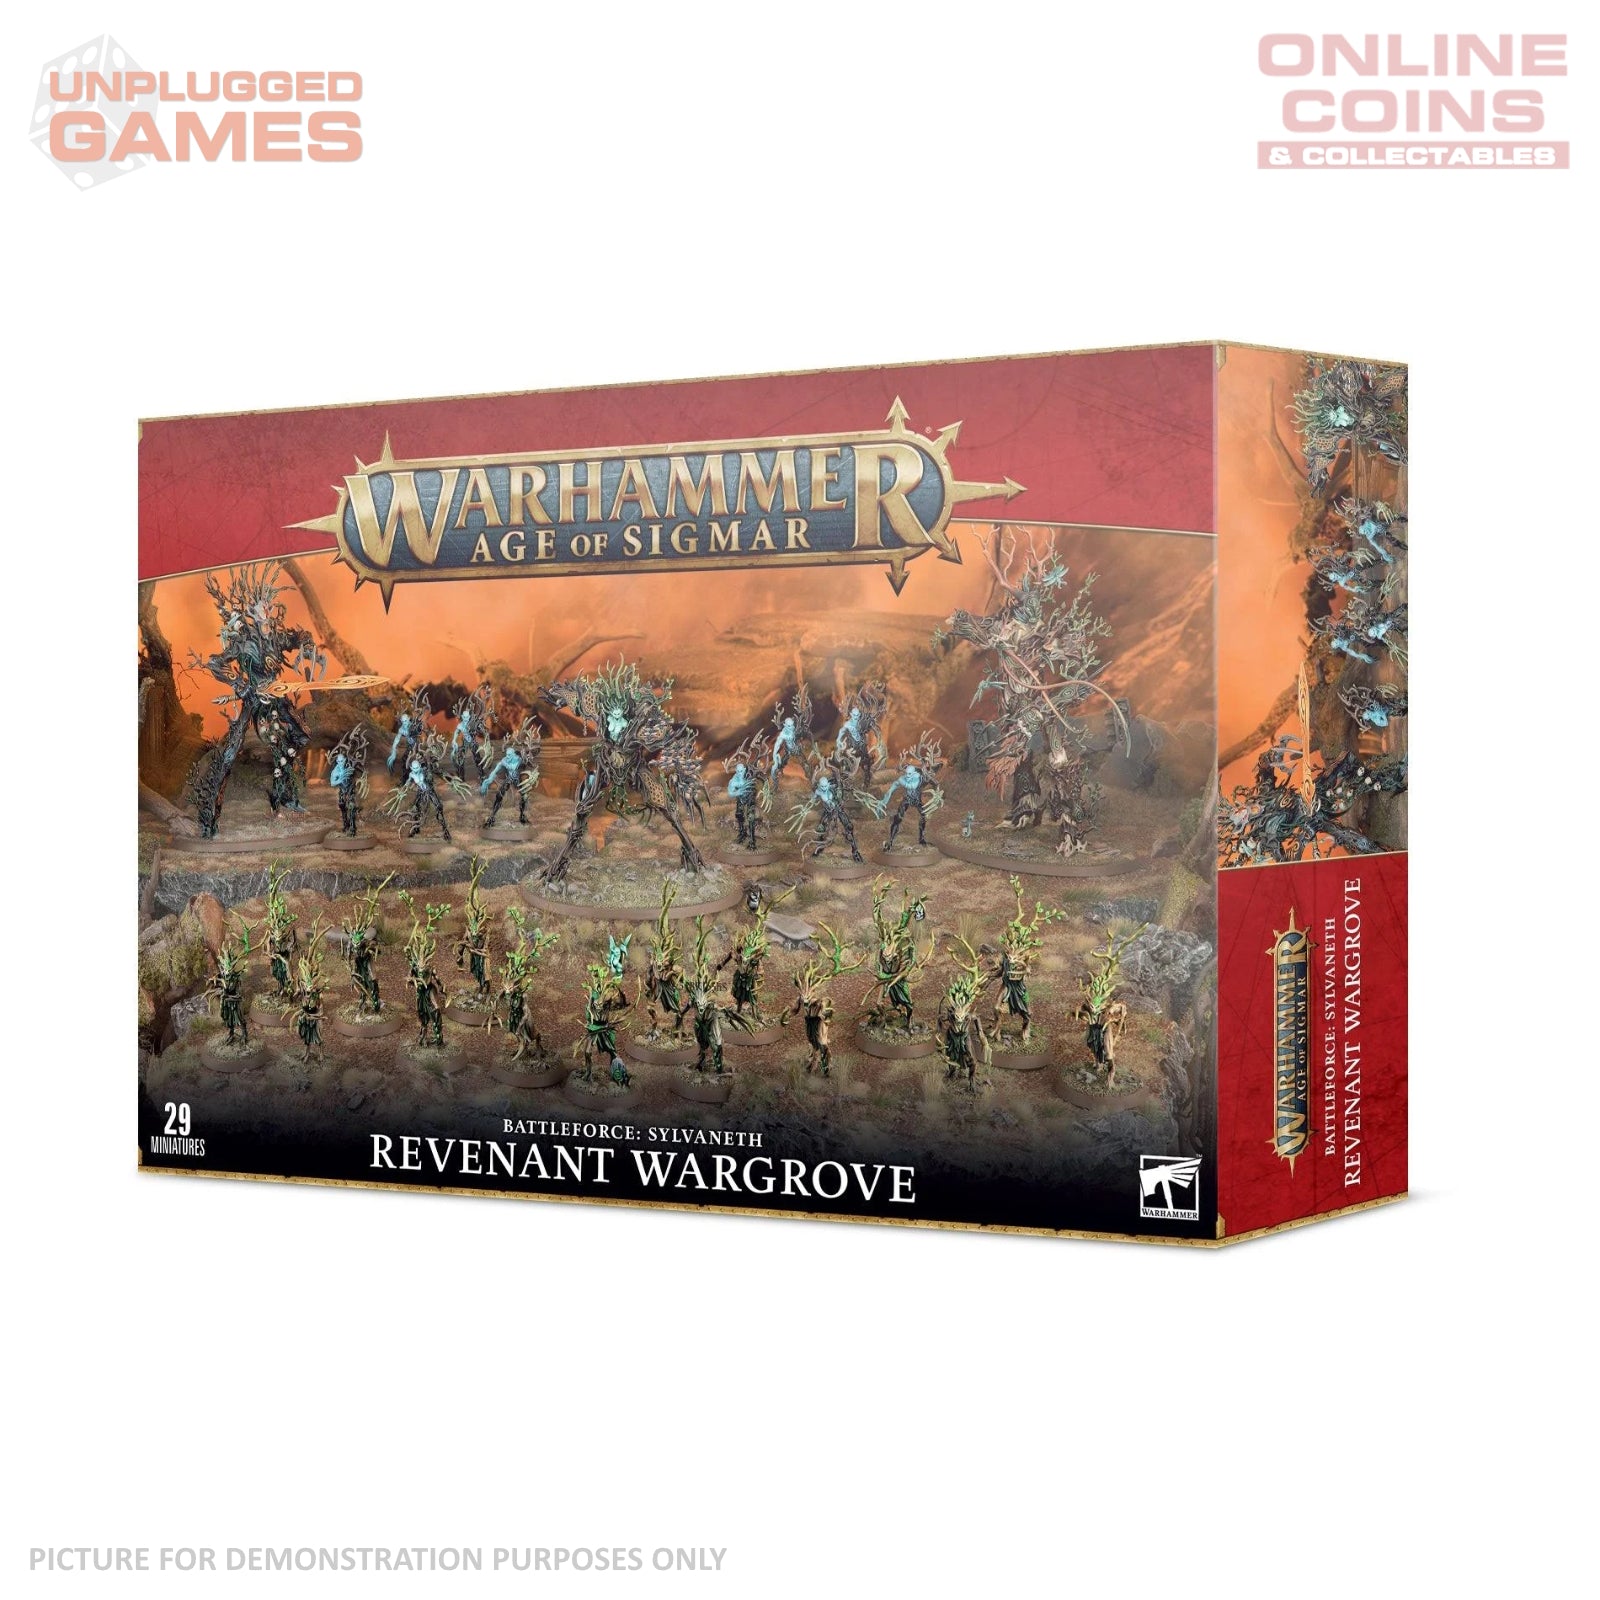 Warhammer Age of Sigmar - Battleforce Sylvaneth Revenant Wargrove